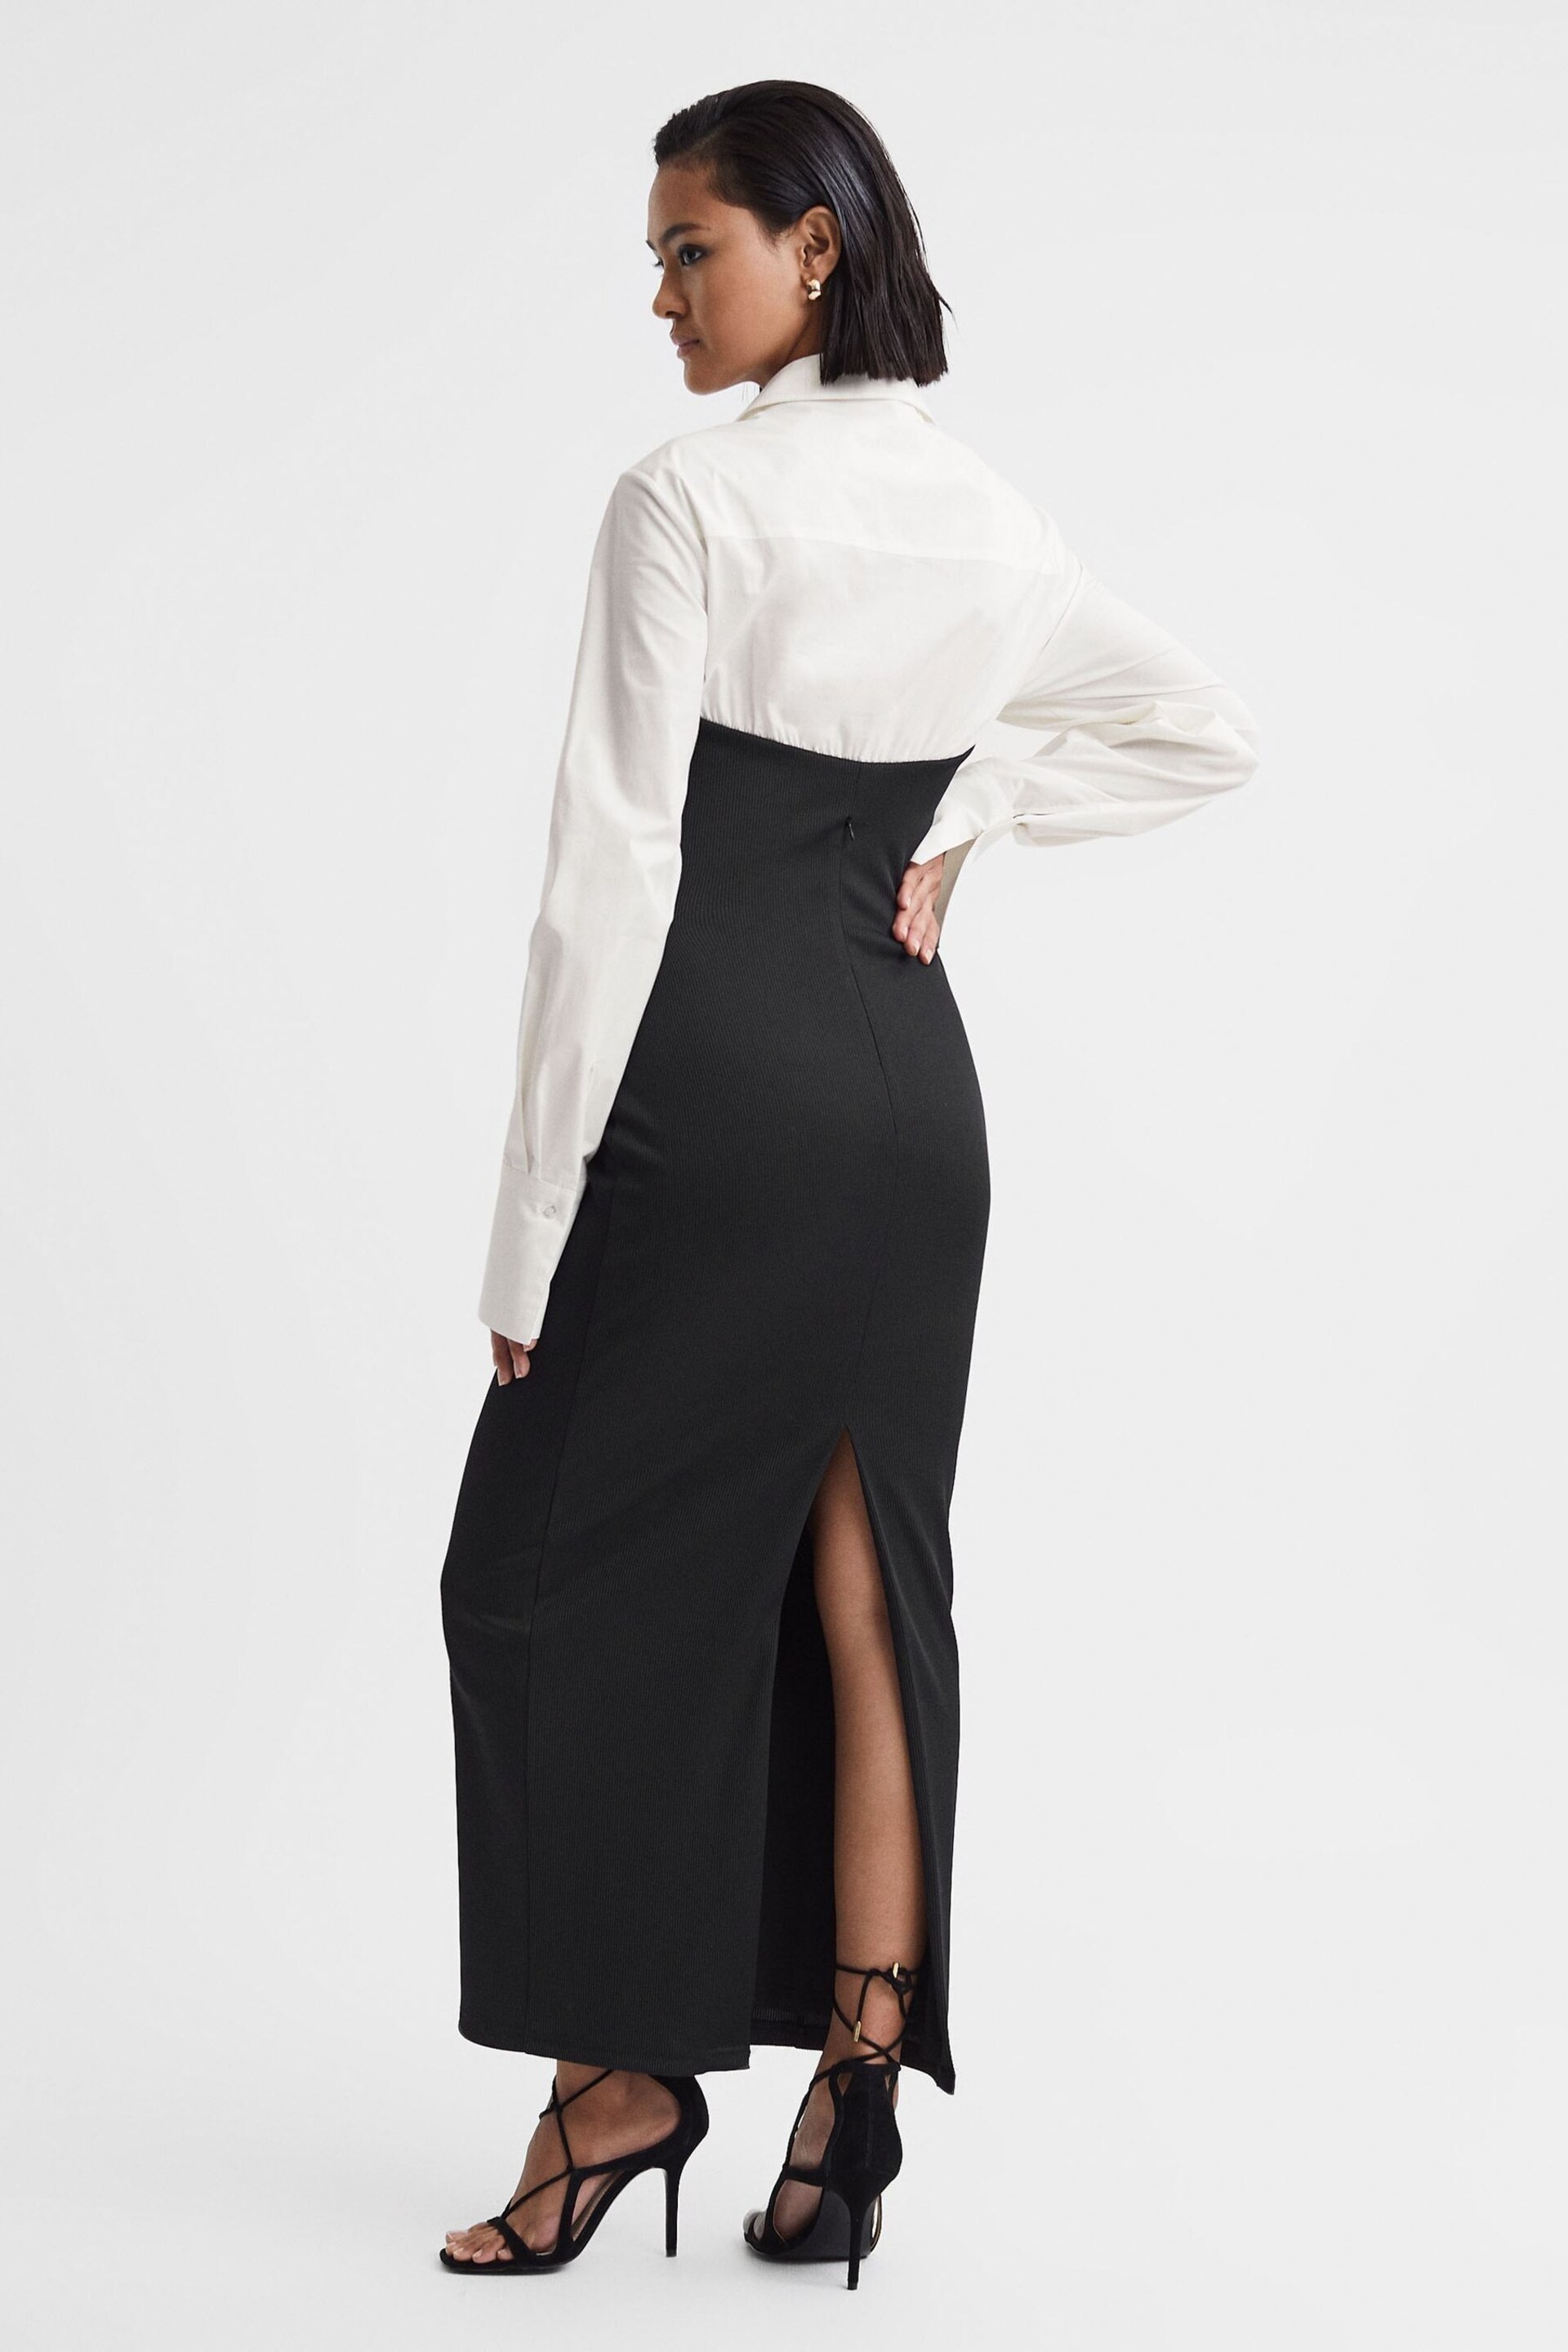 Anna Quan Hybrid Shirt Jersey Maxi Dress - Image 4 of 5